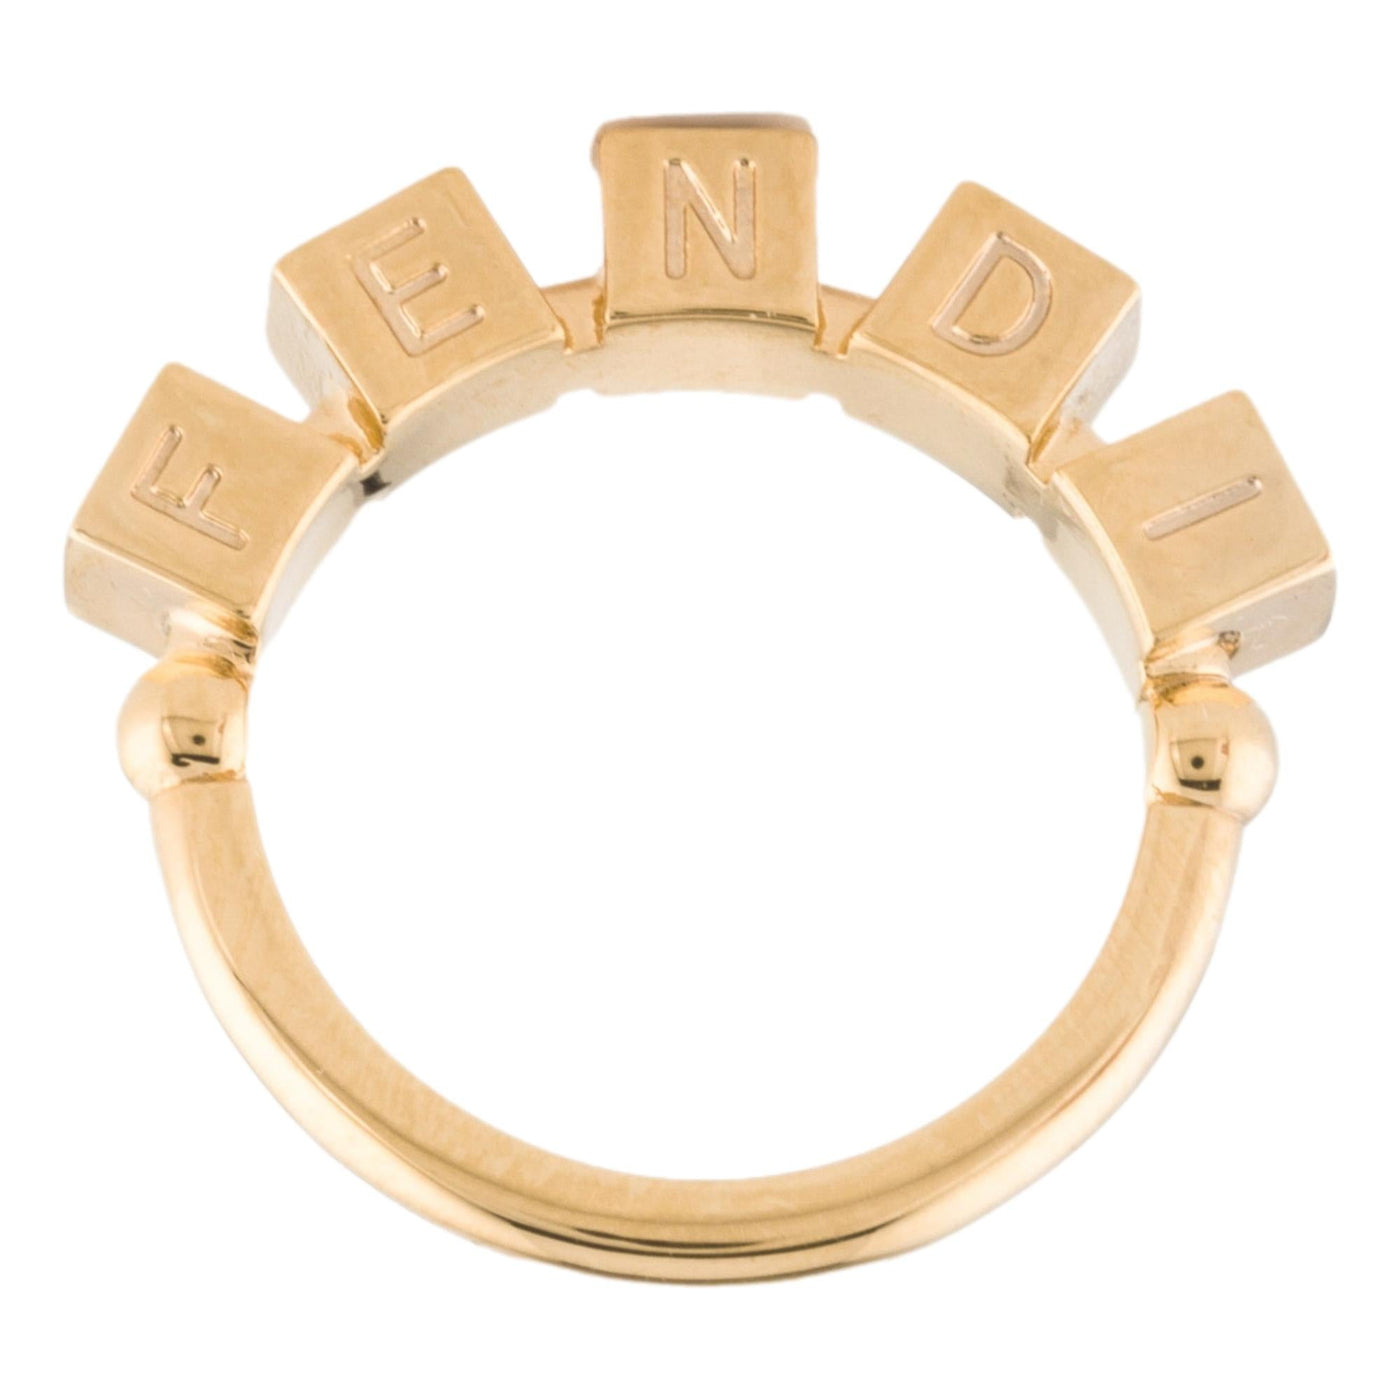 Fendi Fendrigraphy Letters Gold Metal Ring Size Small - LUXURYMRKT